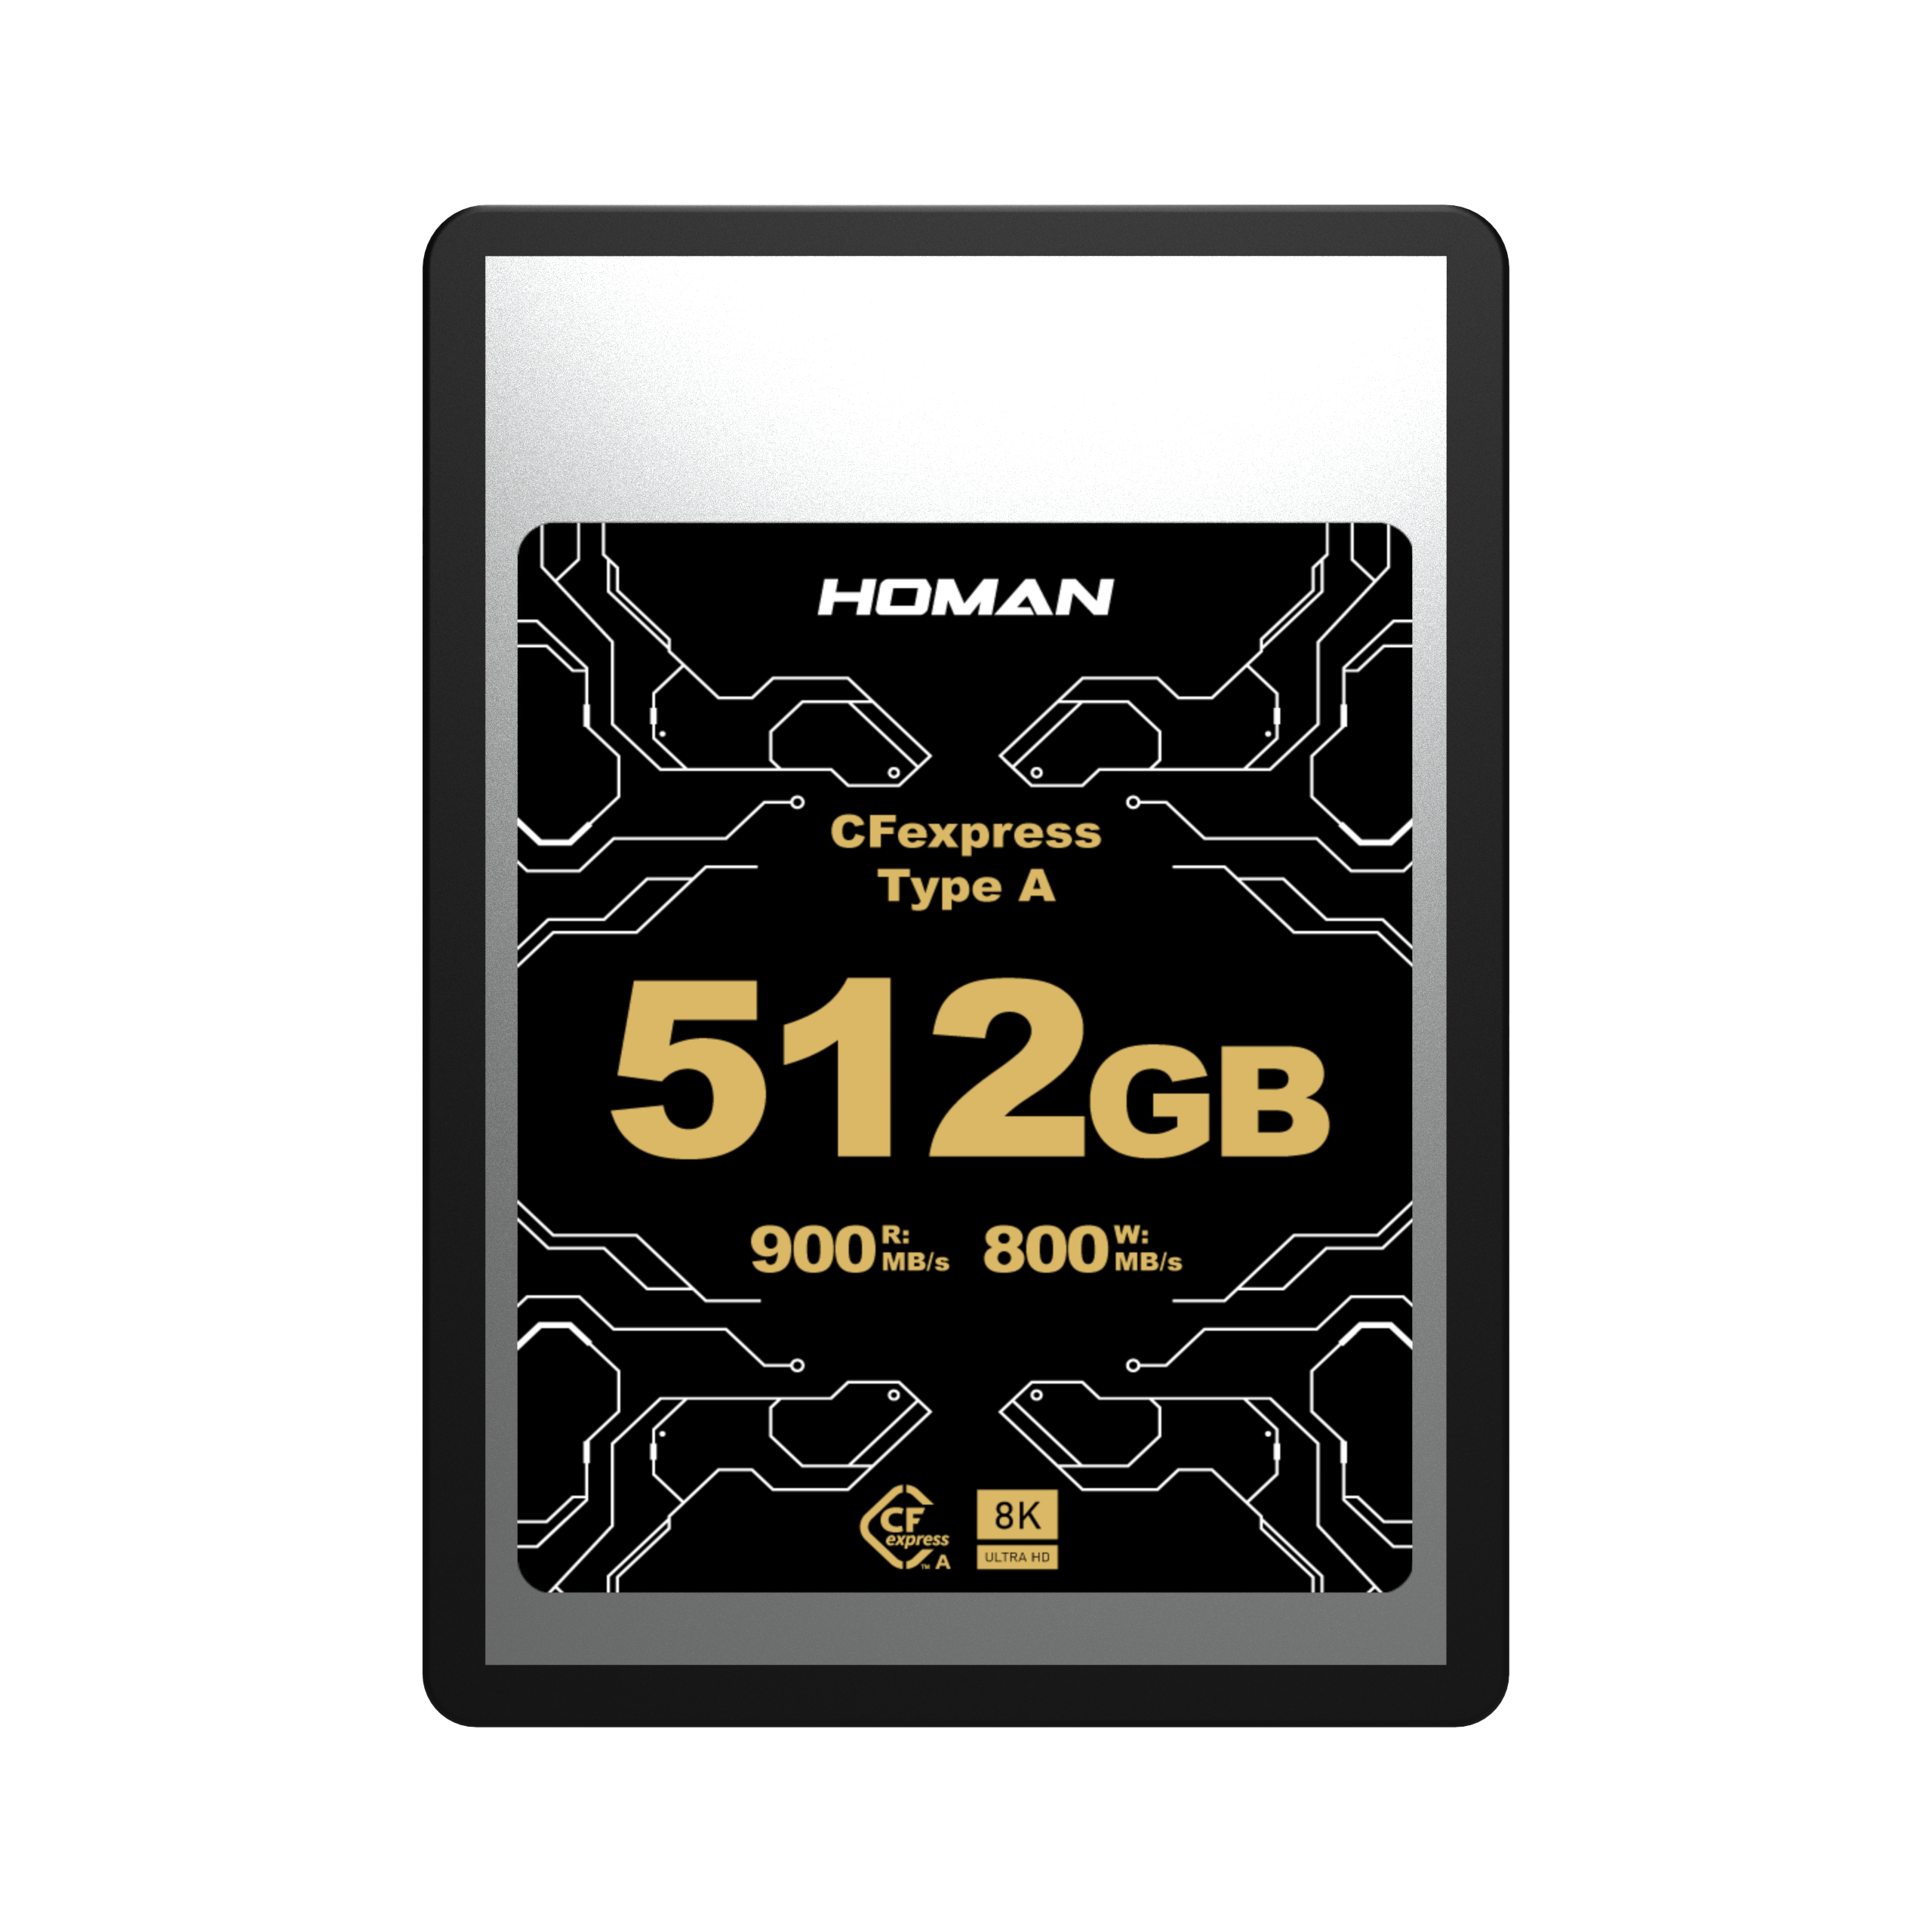 HOMAN CFexpress Card Type A 512GB